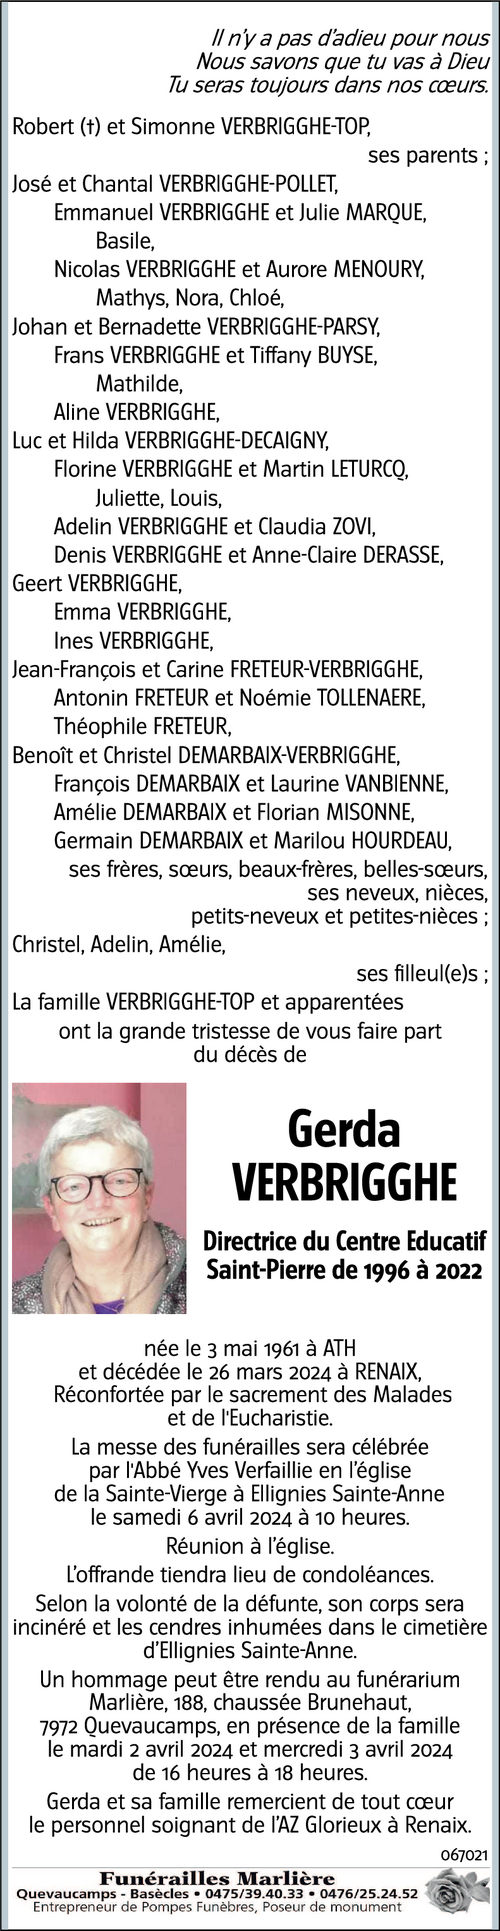 Gerda VERBRIGGHE